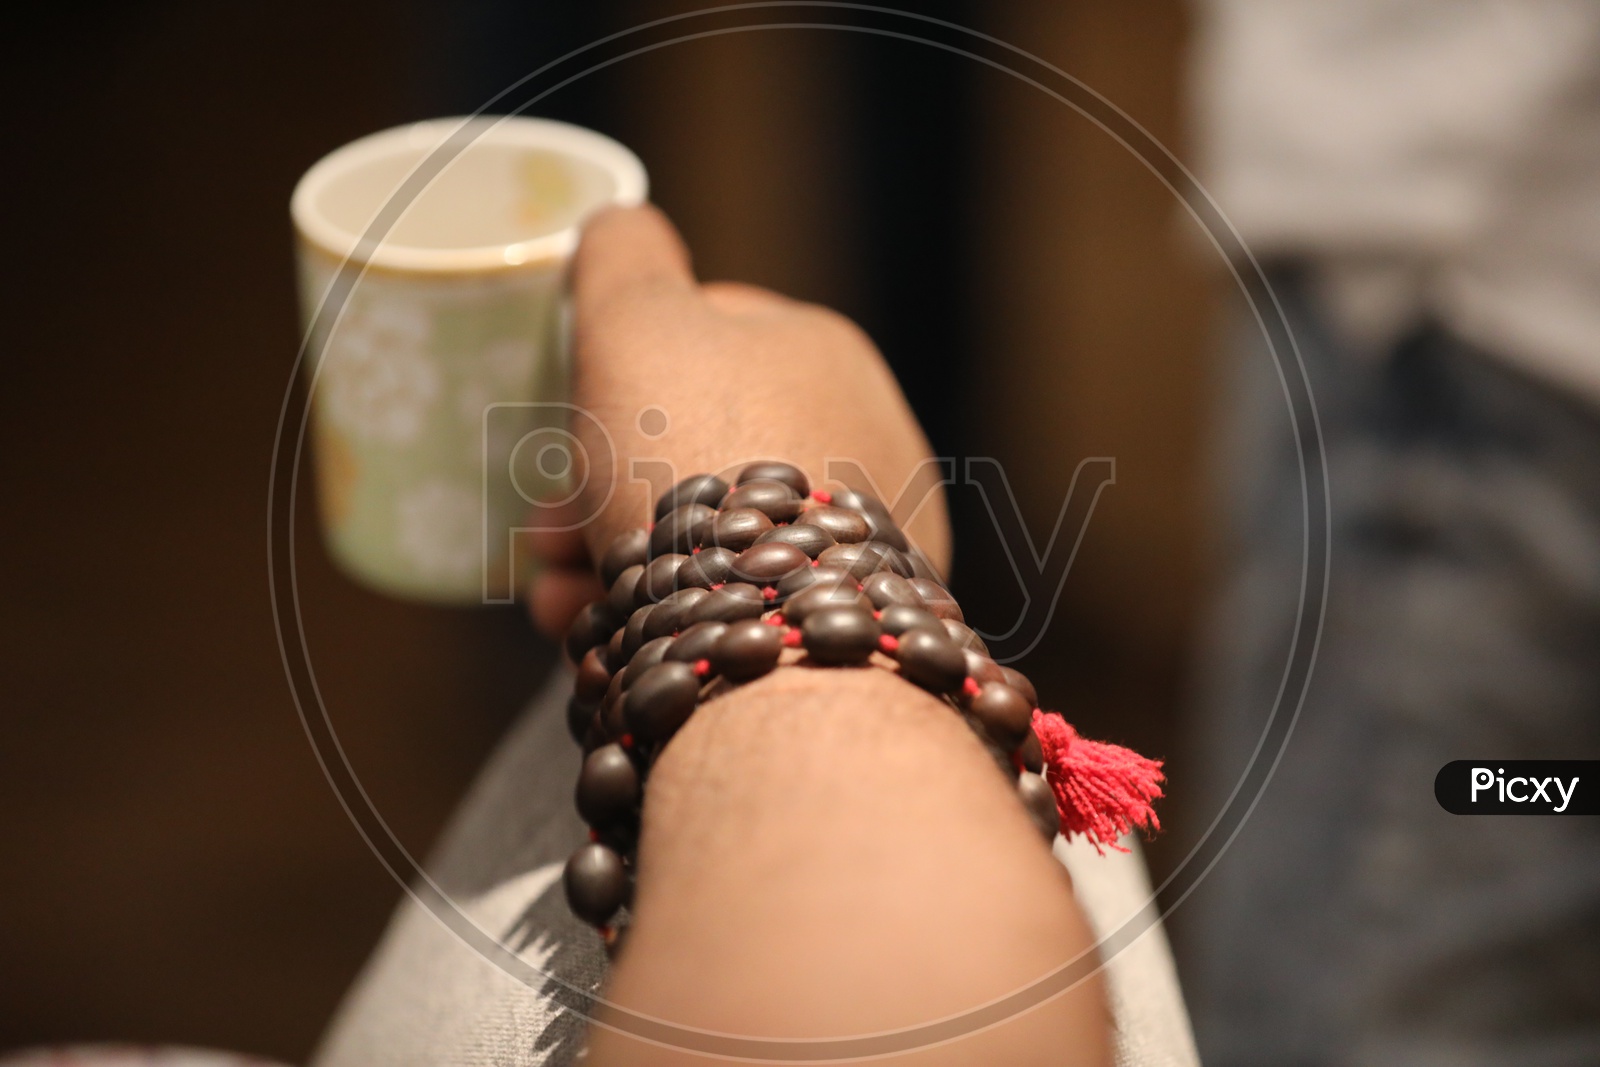 A man holding a coffee mug wearing beaded bracelet